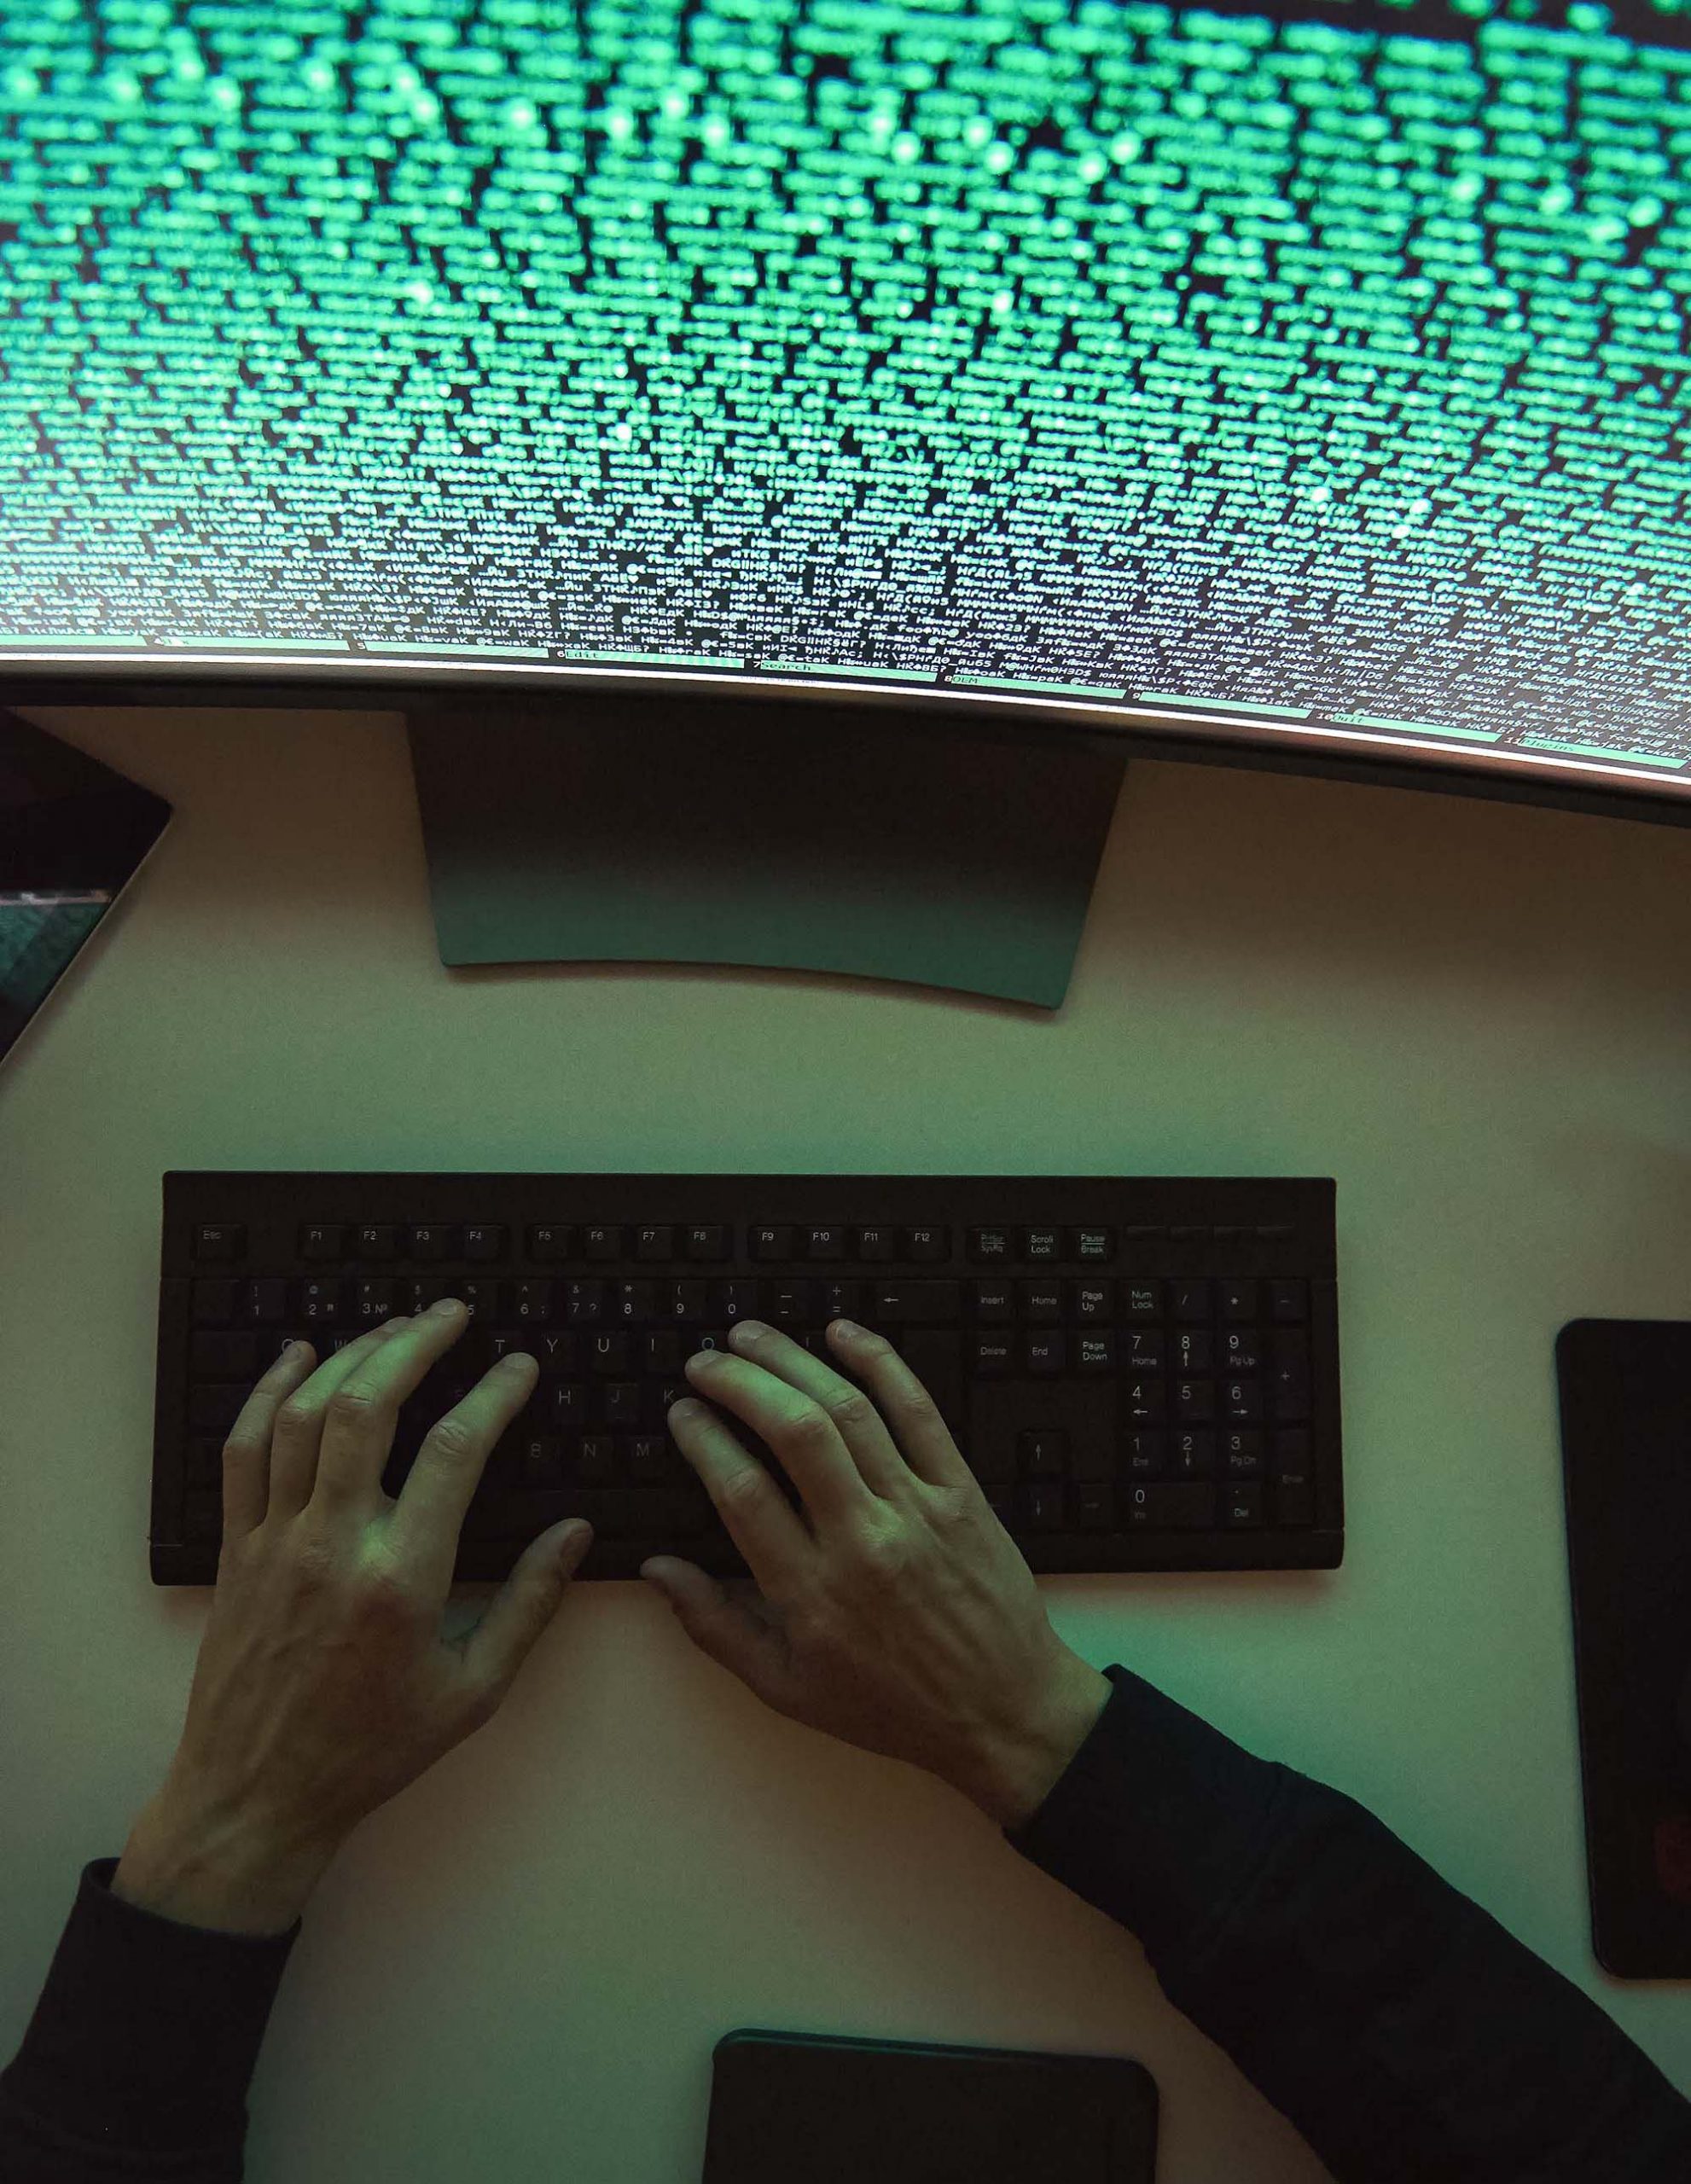 Hacker using a computer